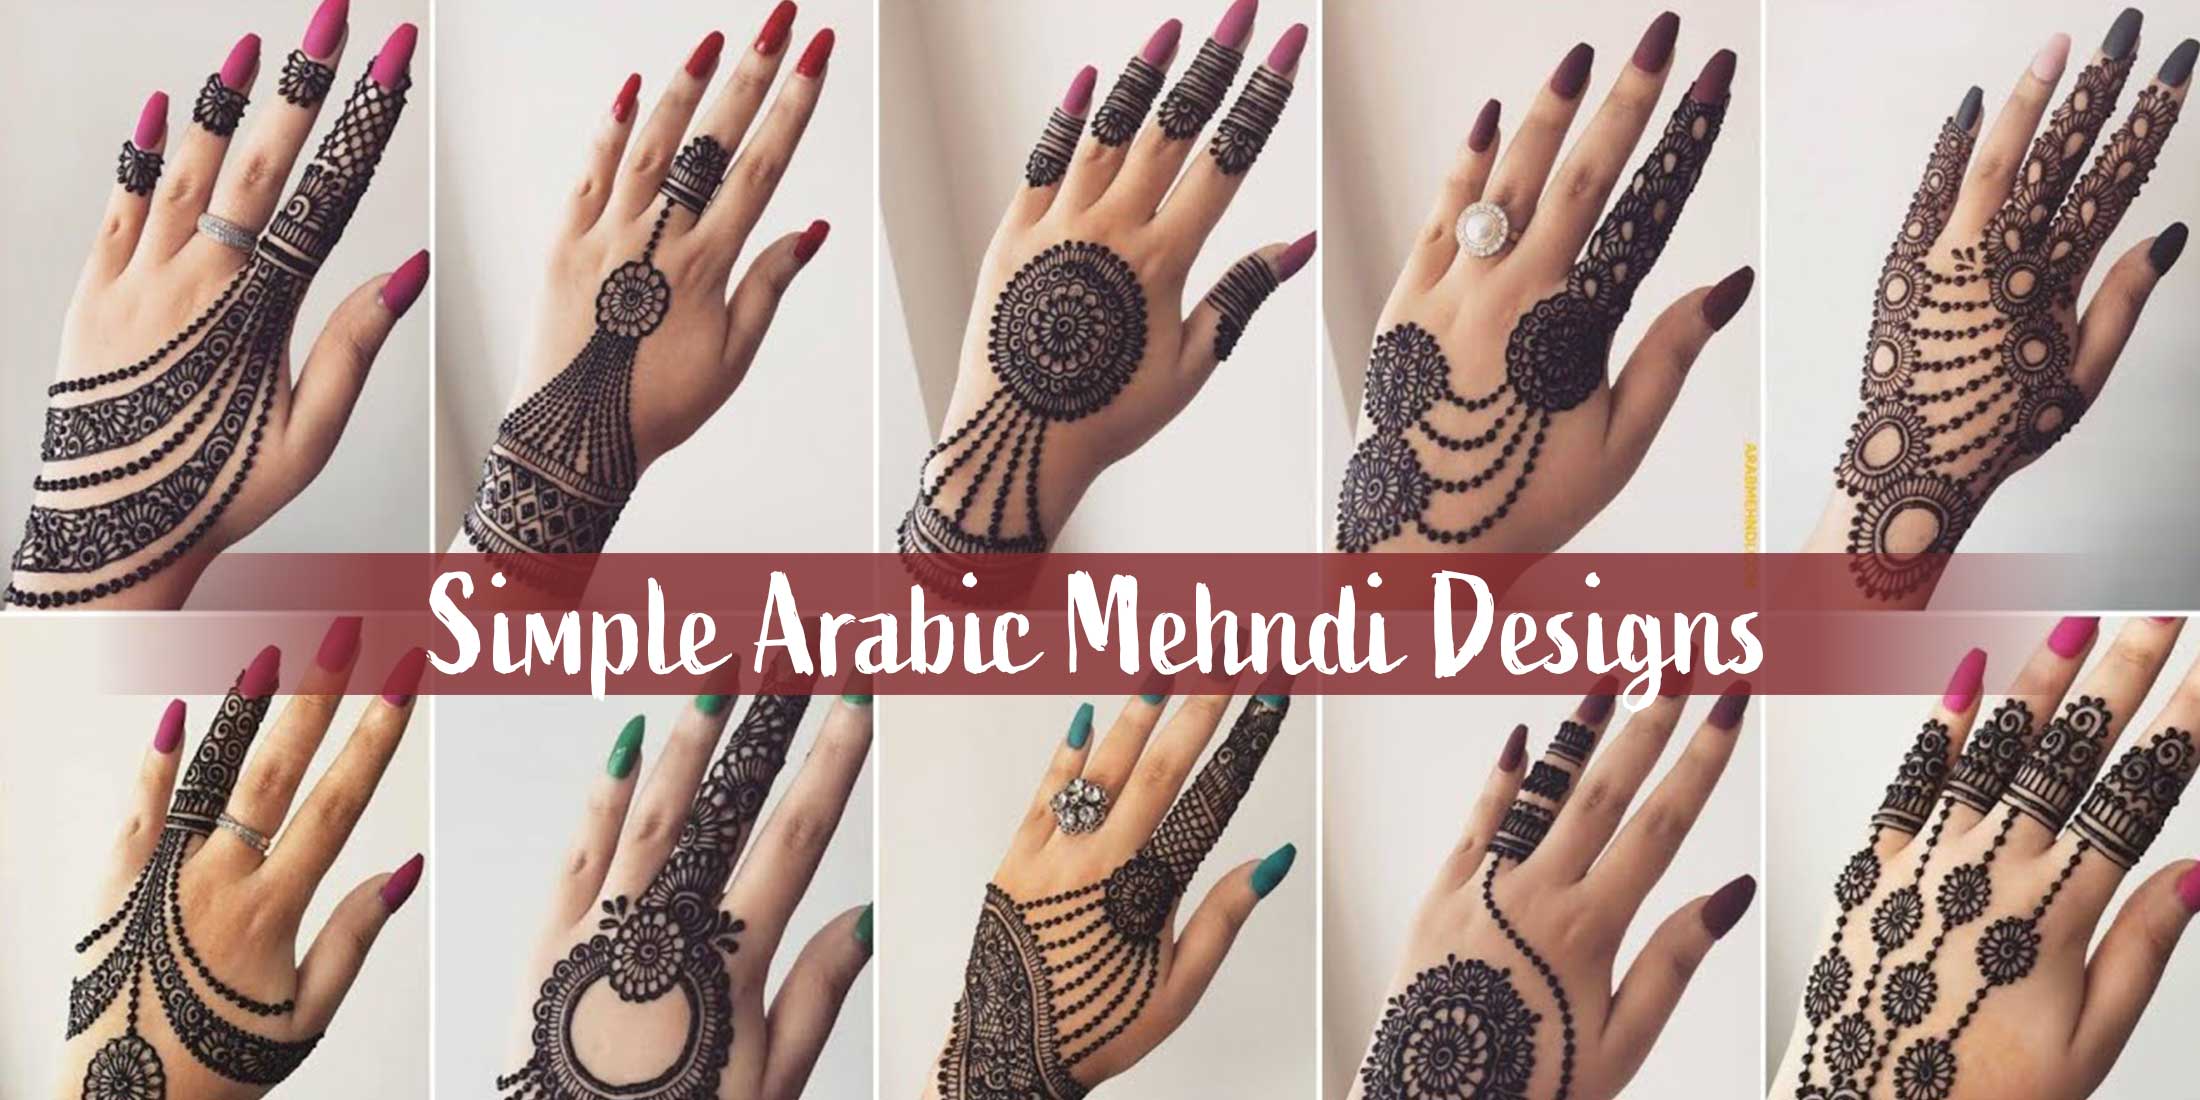 Latest Simple Arabic Mehndi Designs For Eid | FashionGlint